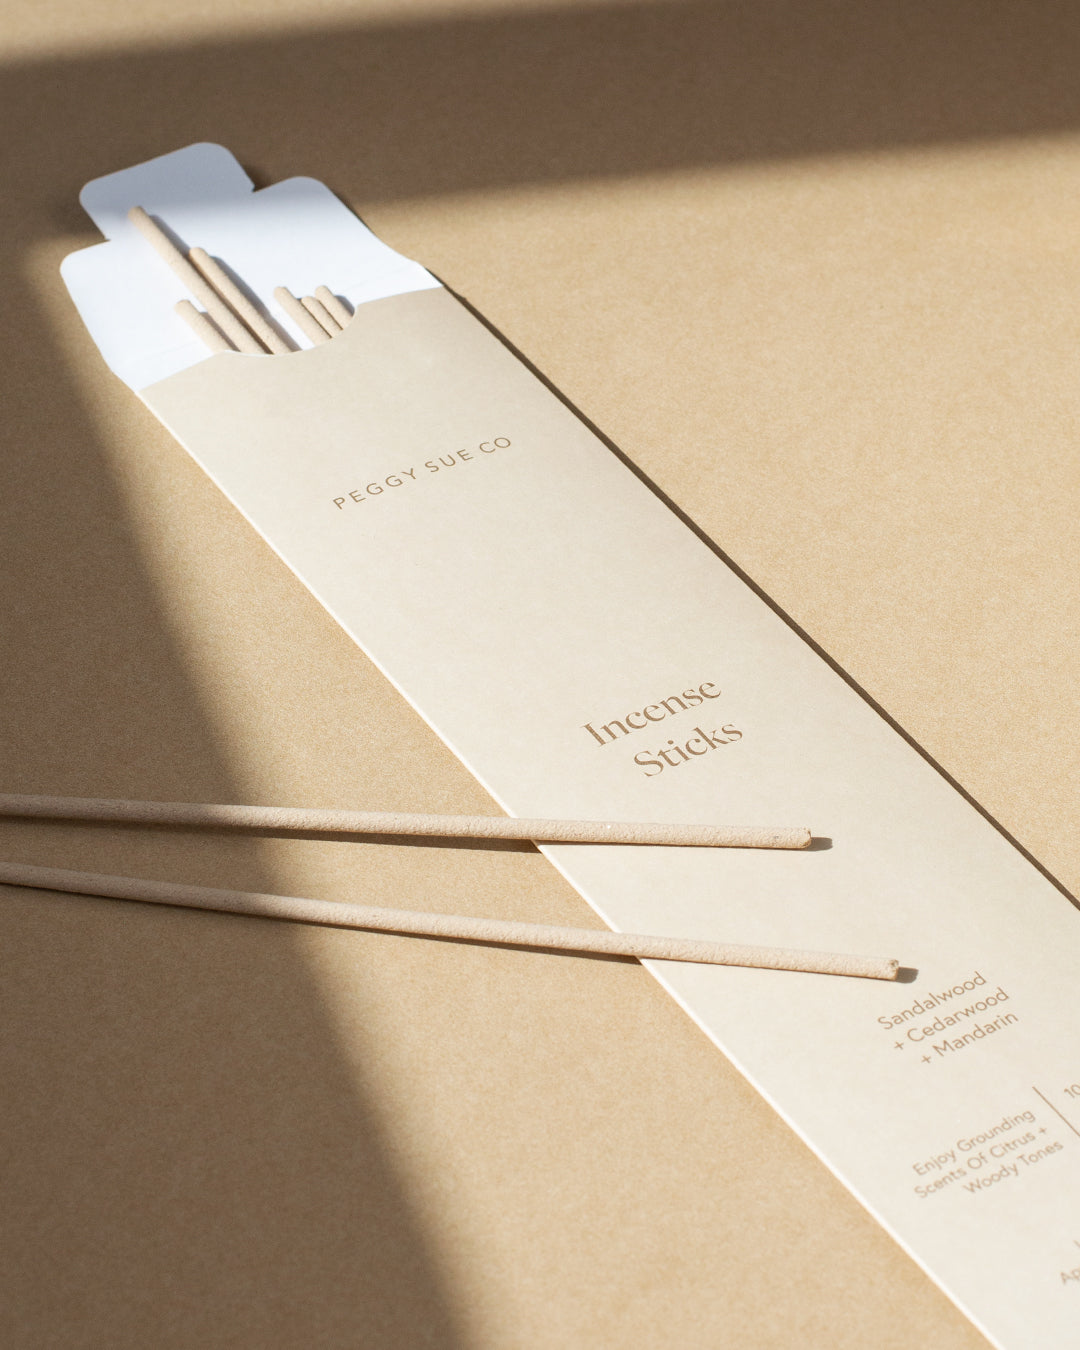 Incense Sticks | Mandarin + Sandalwood + Cedarwood